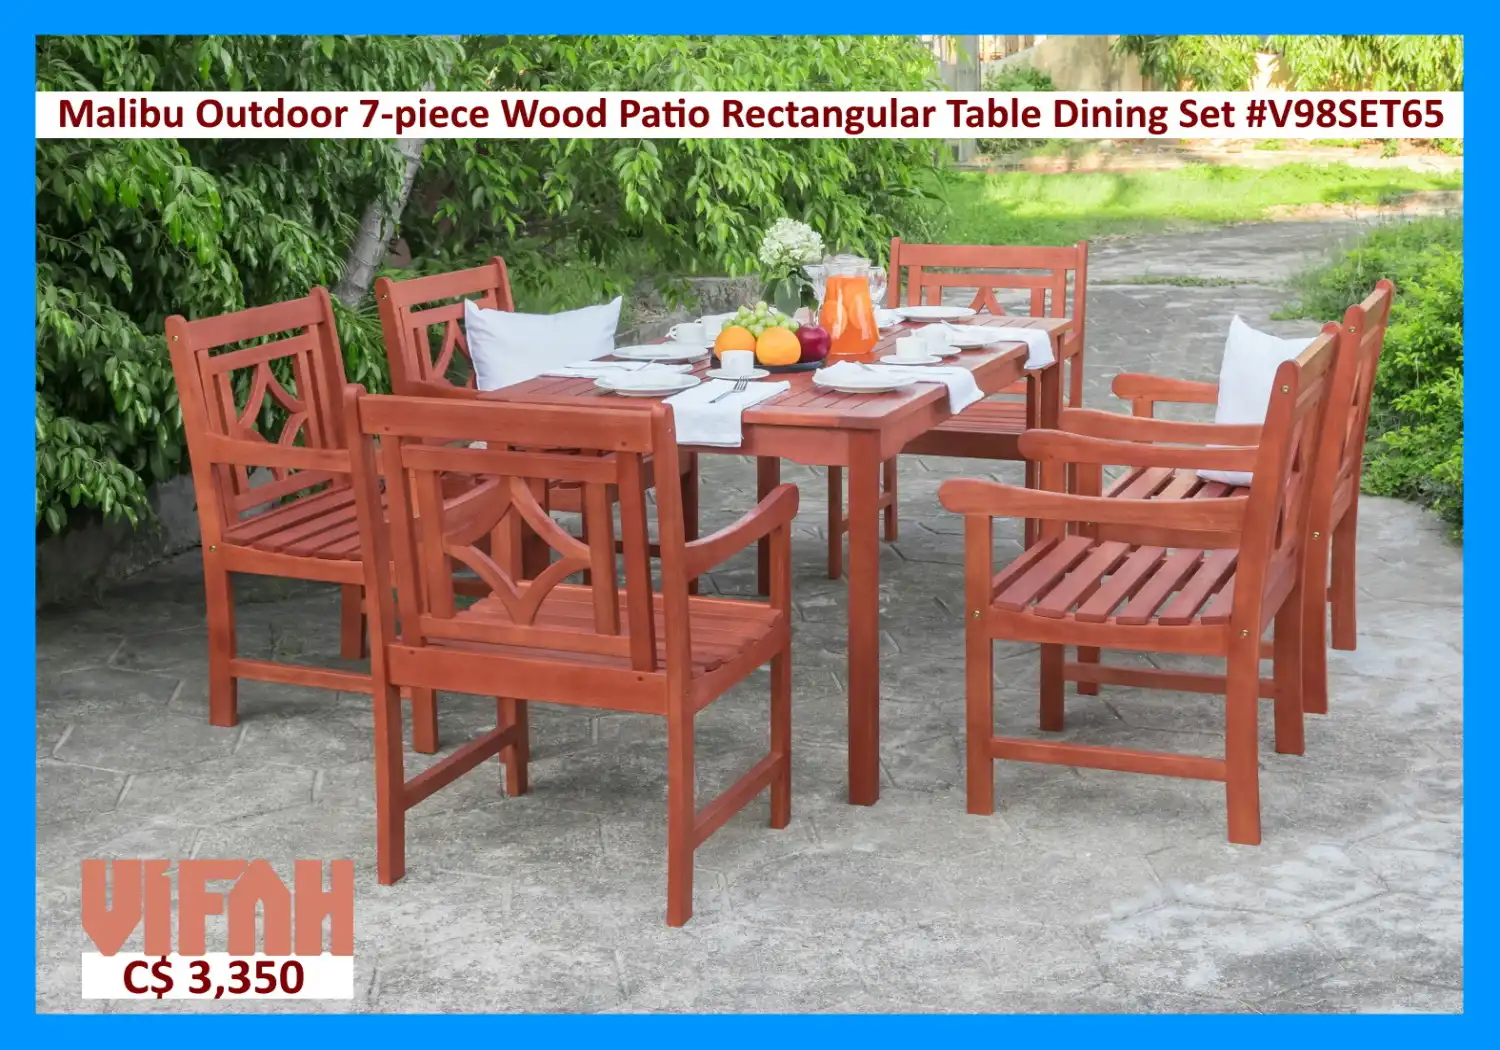 MALIBU Outdoor #V98SET65 7-piece Wood Patio Rectangular Table Dining Set